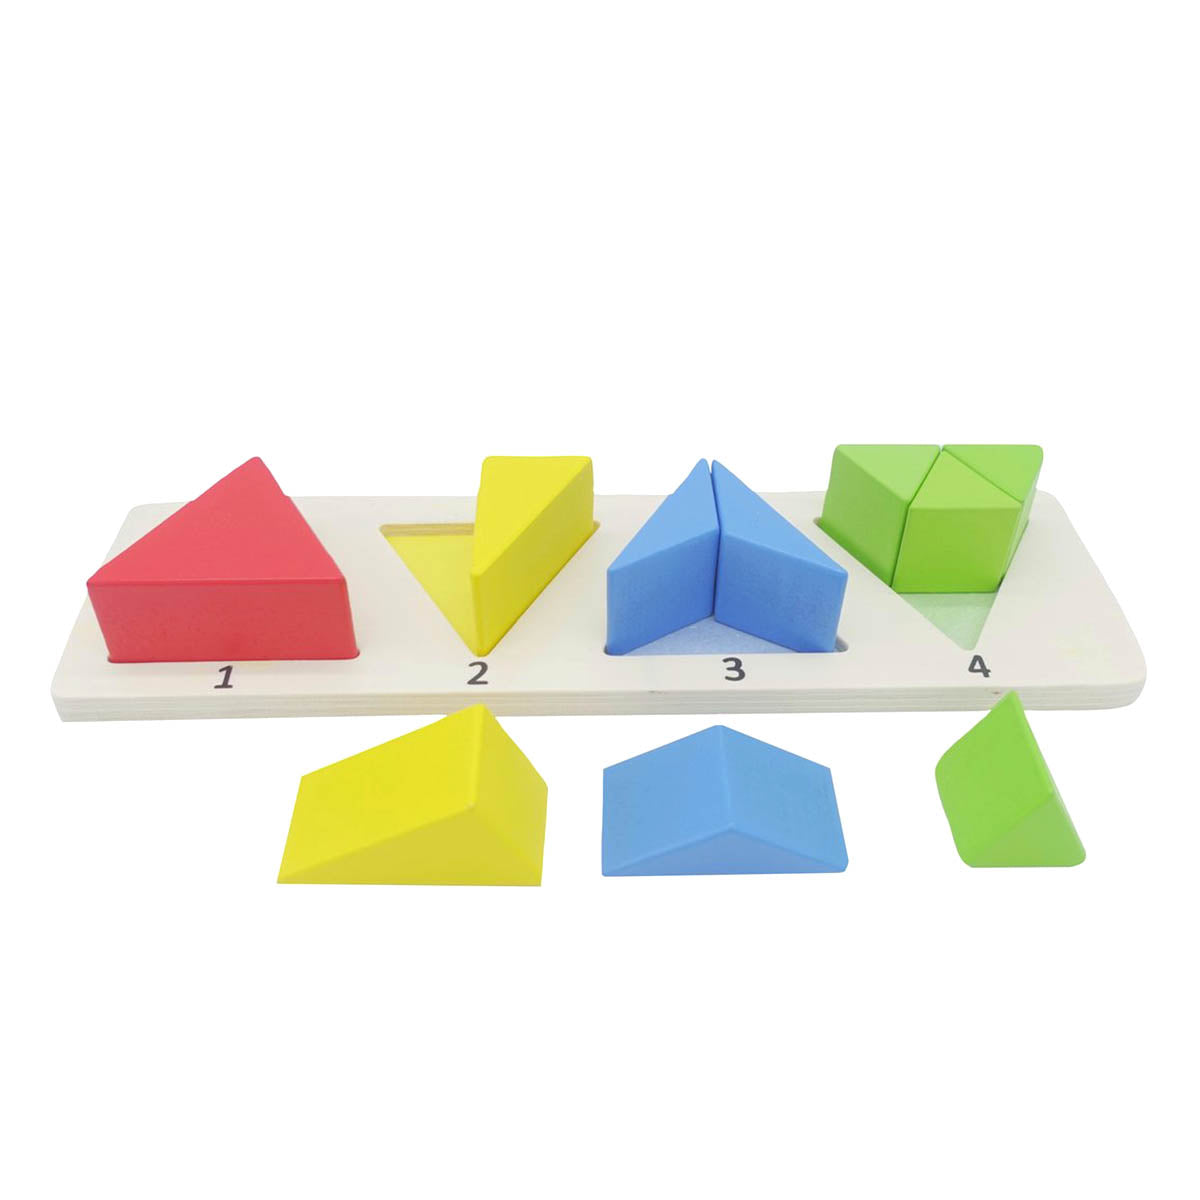 Geometrische Puzzle - Montessori speelgoed - Driehoek vormen - 11 Delig - Ariko